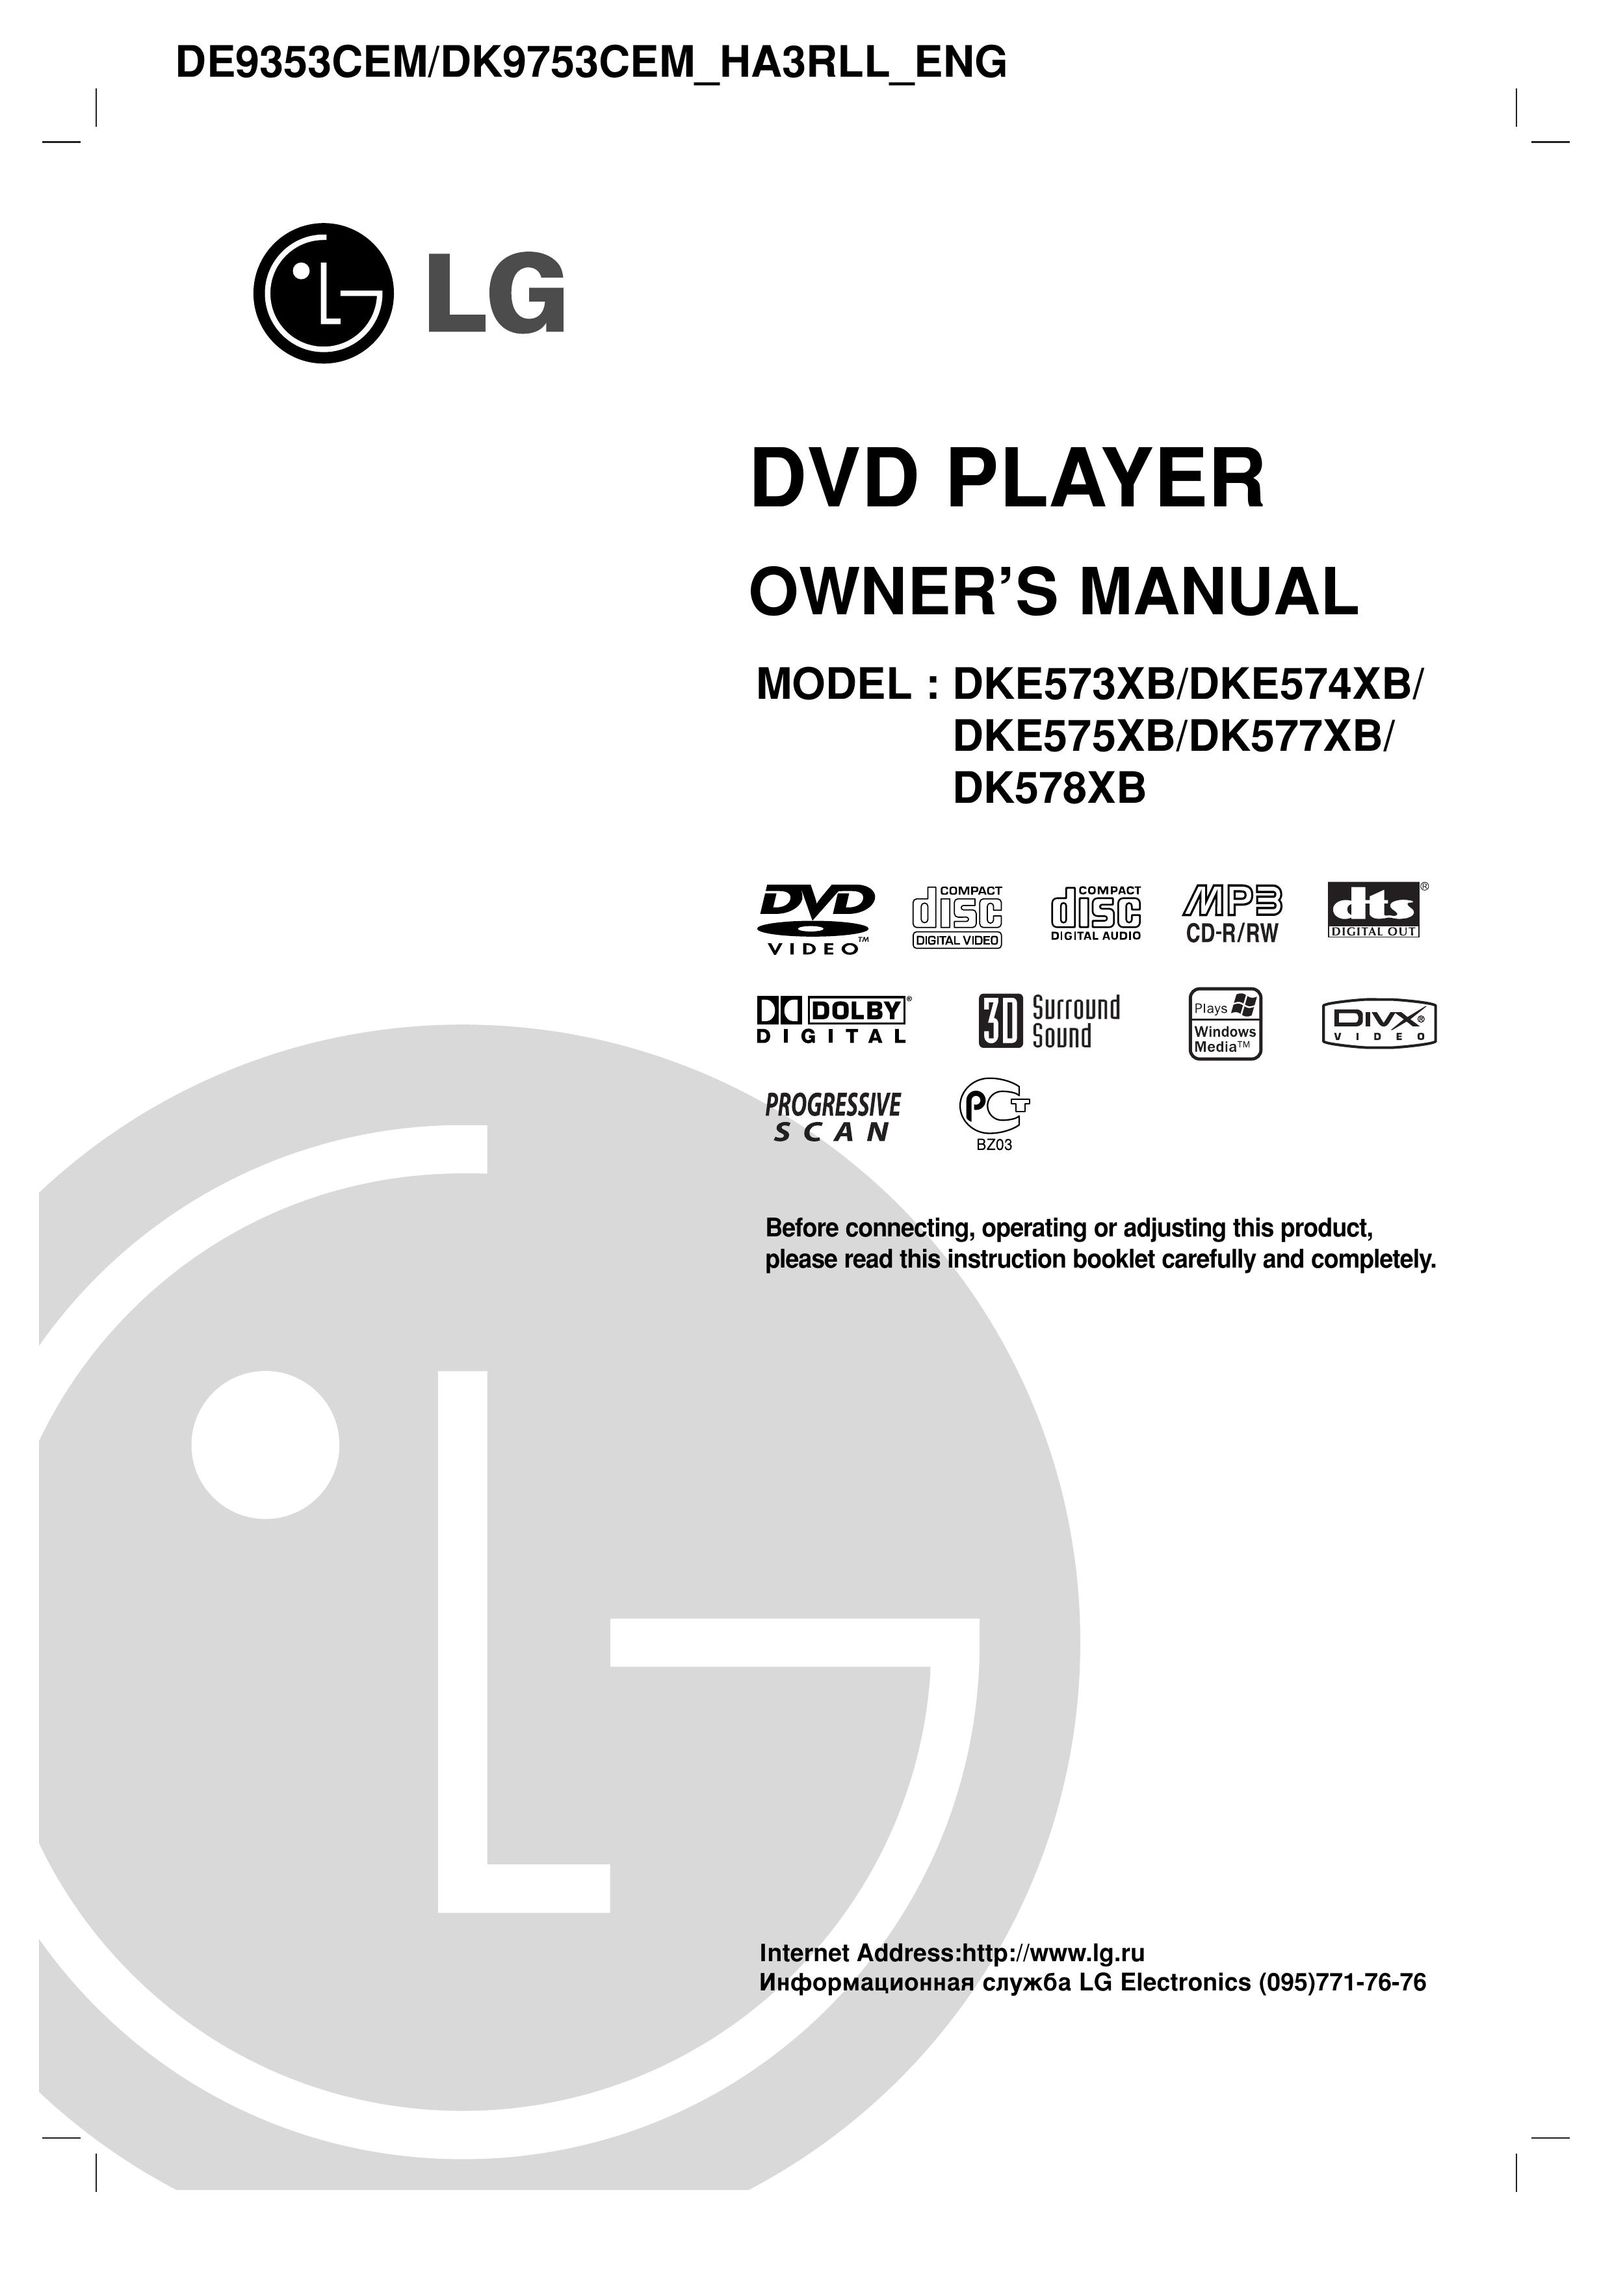 LG Electronics DKE575XB DVD Player User Manual